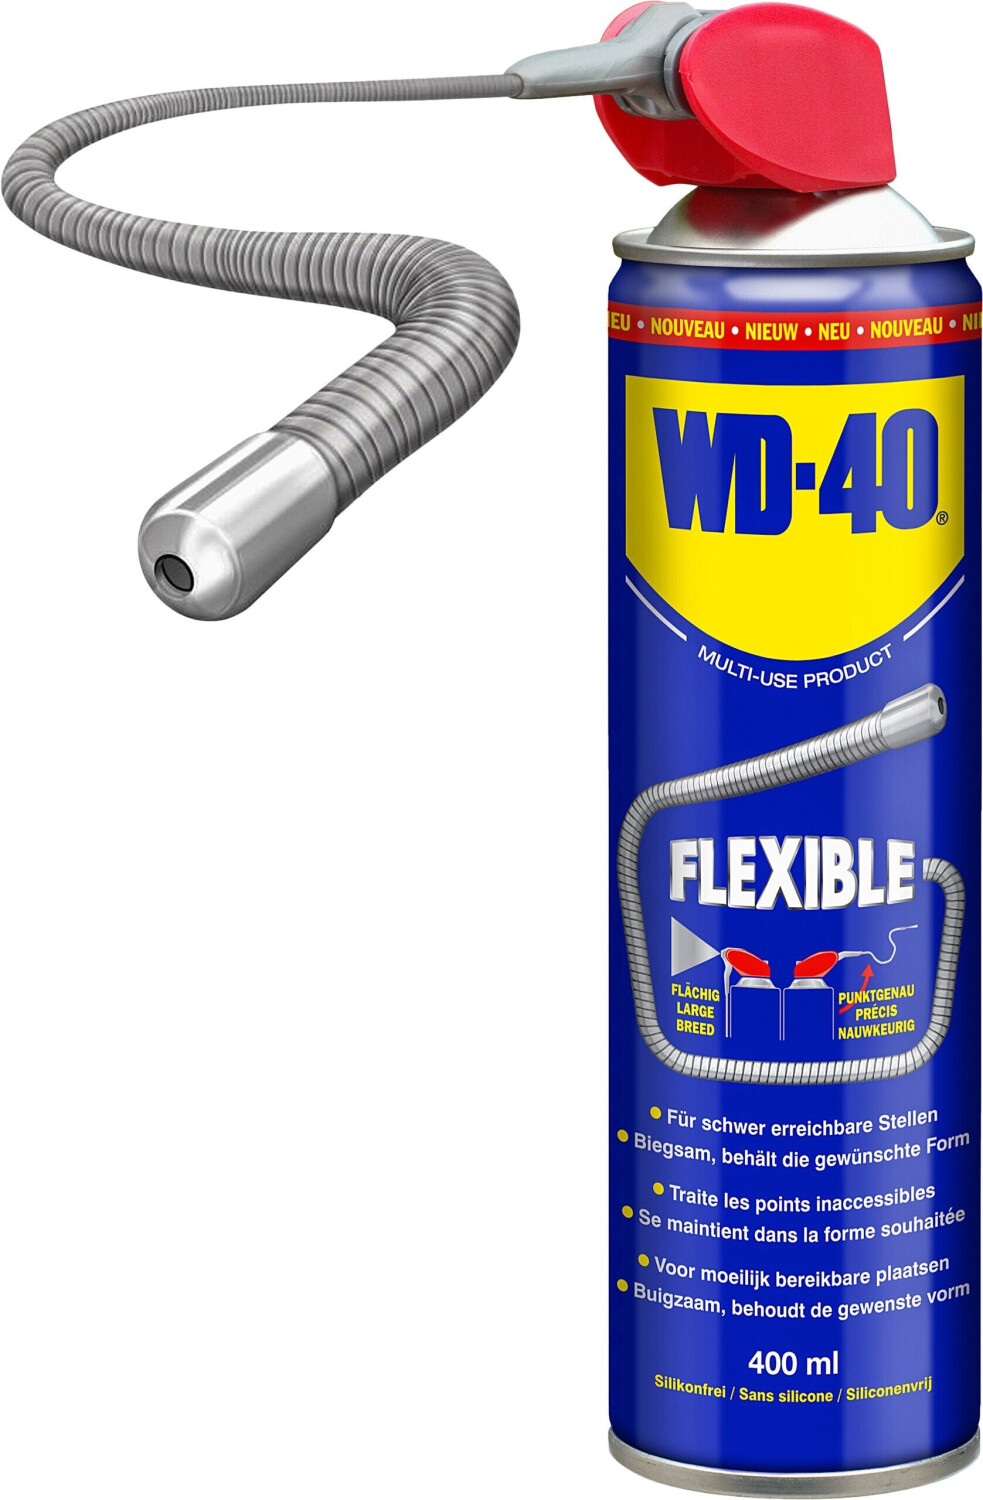 WD-40 flexible 31688 400ml ab € 9,49